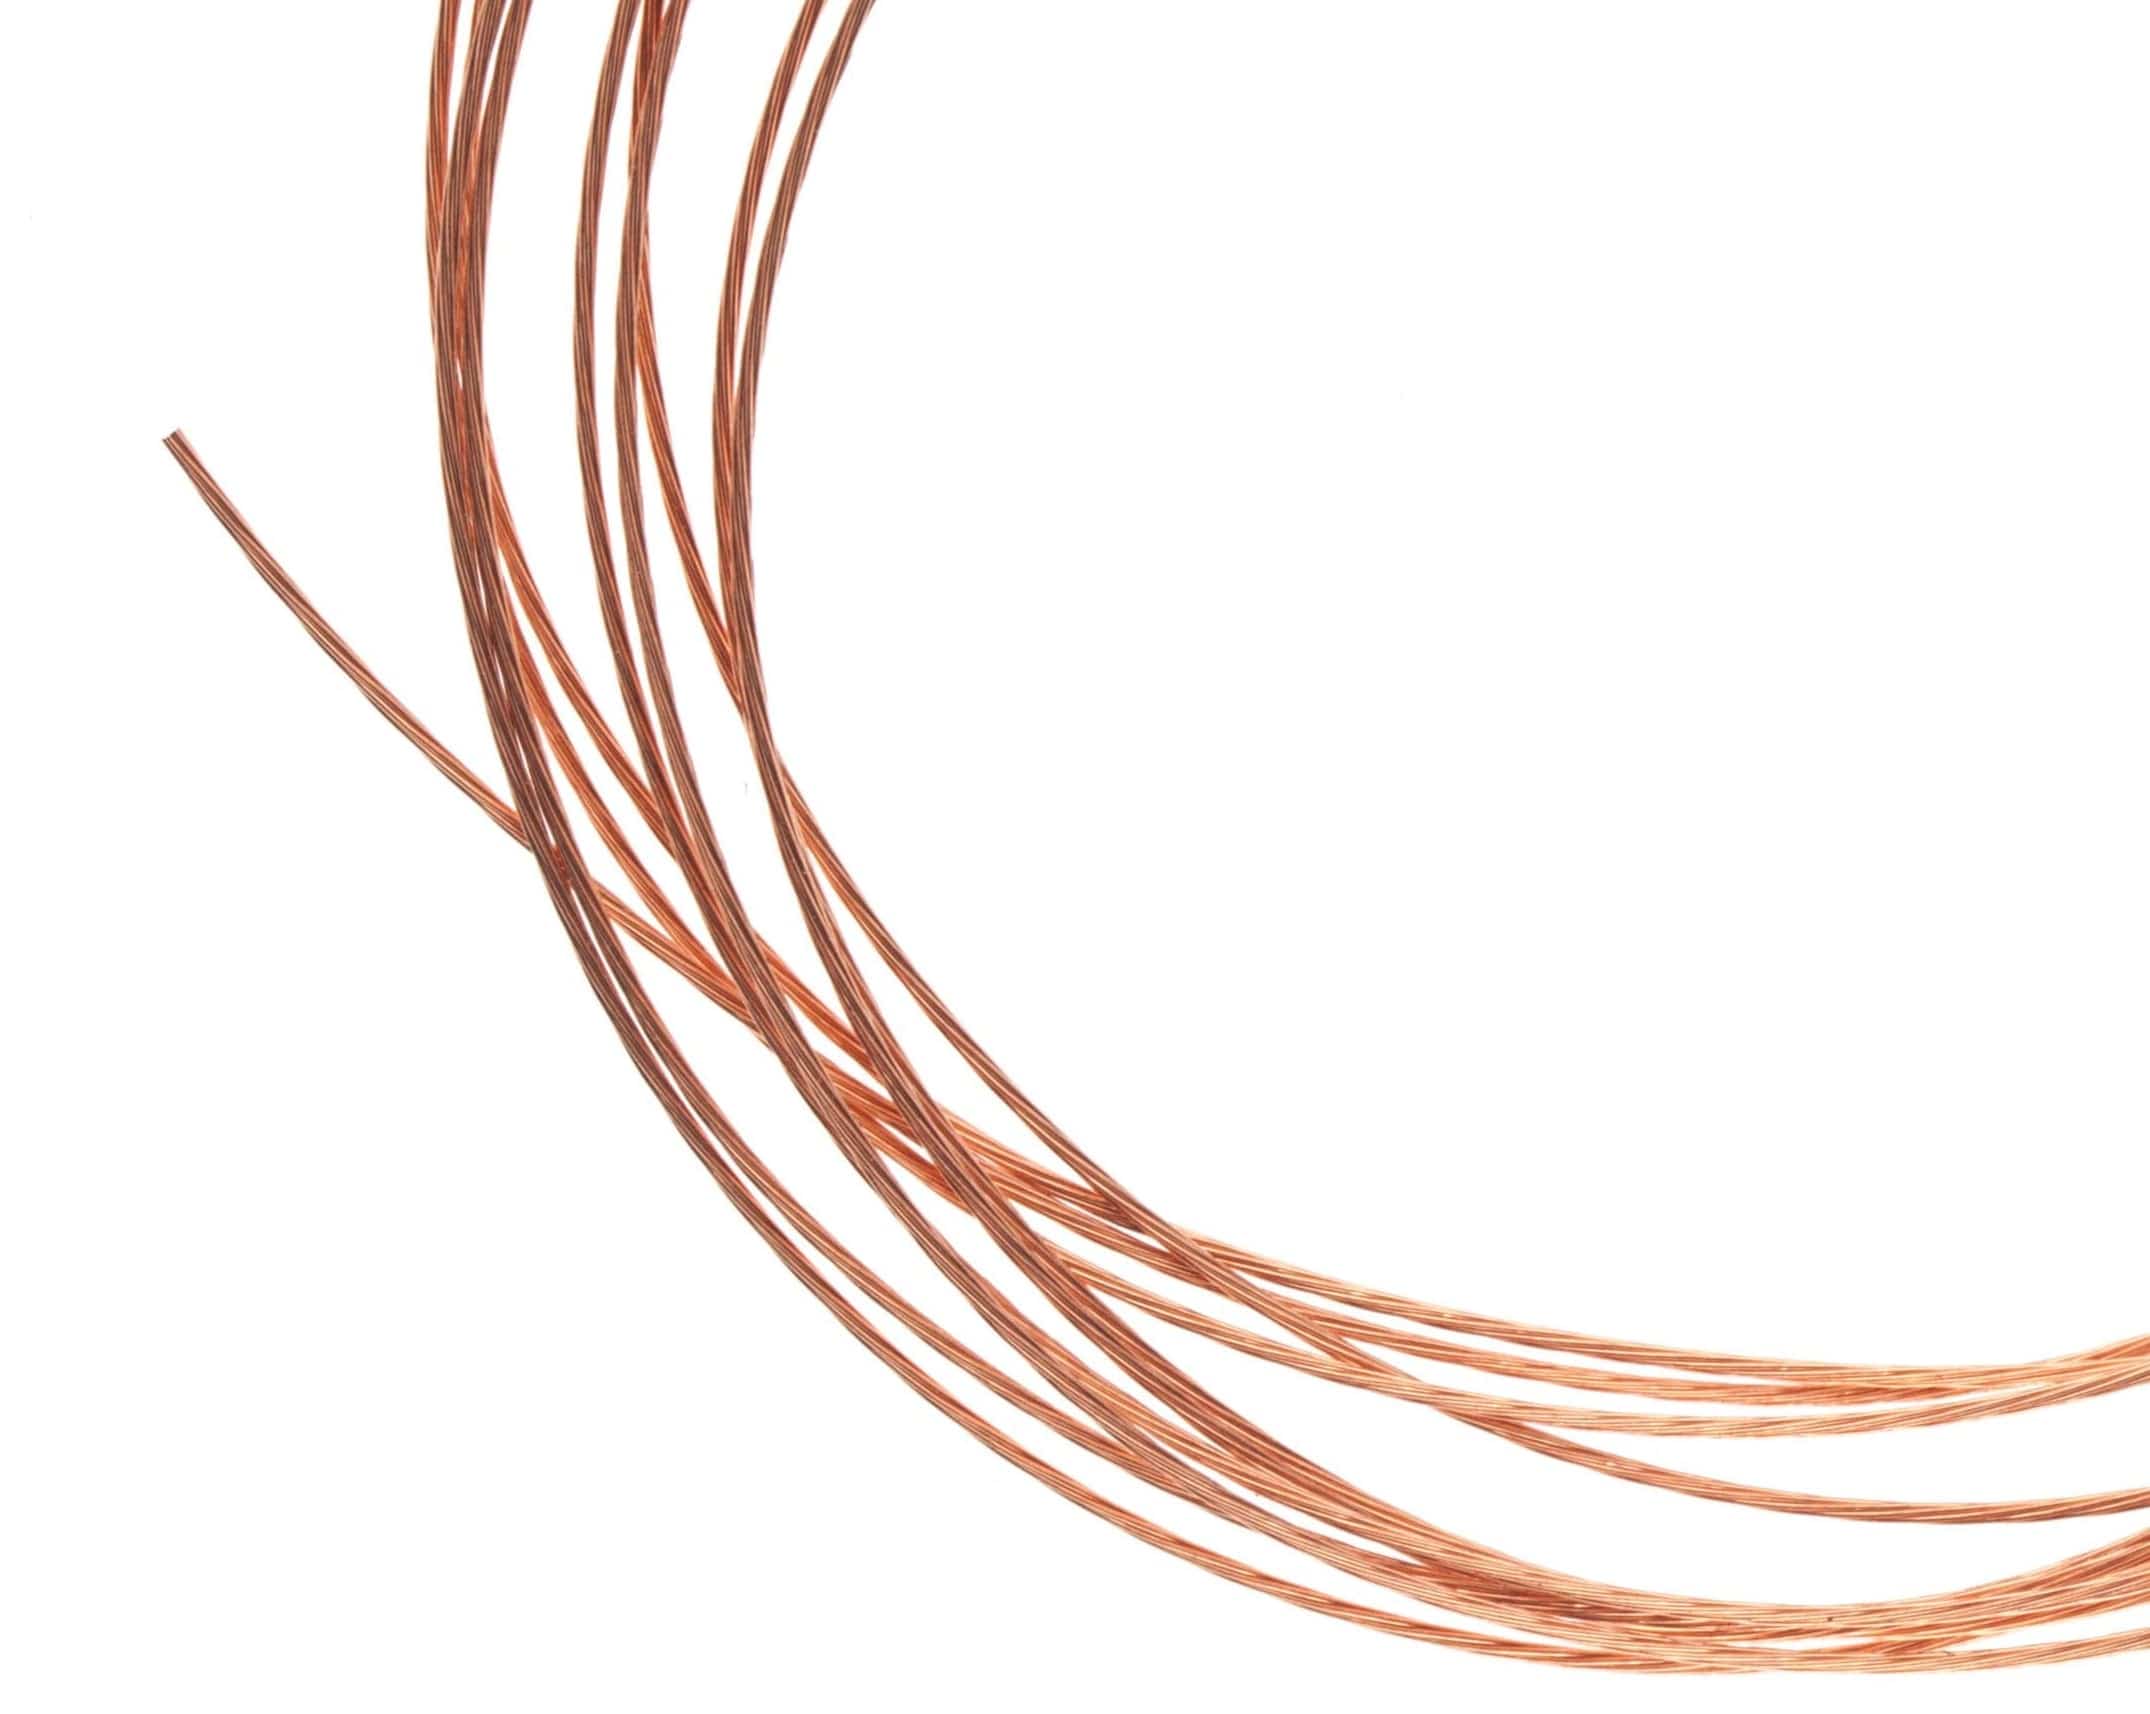 18g Stranded Copper Conductor Wire